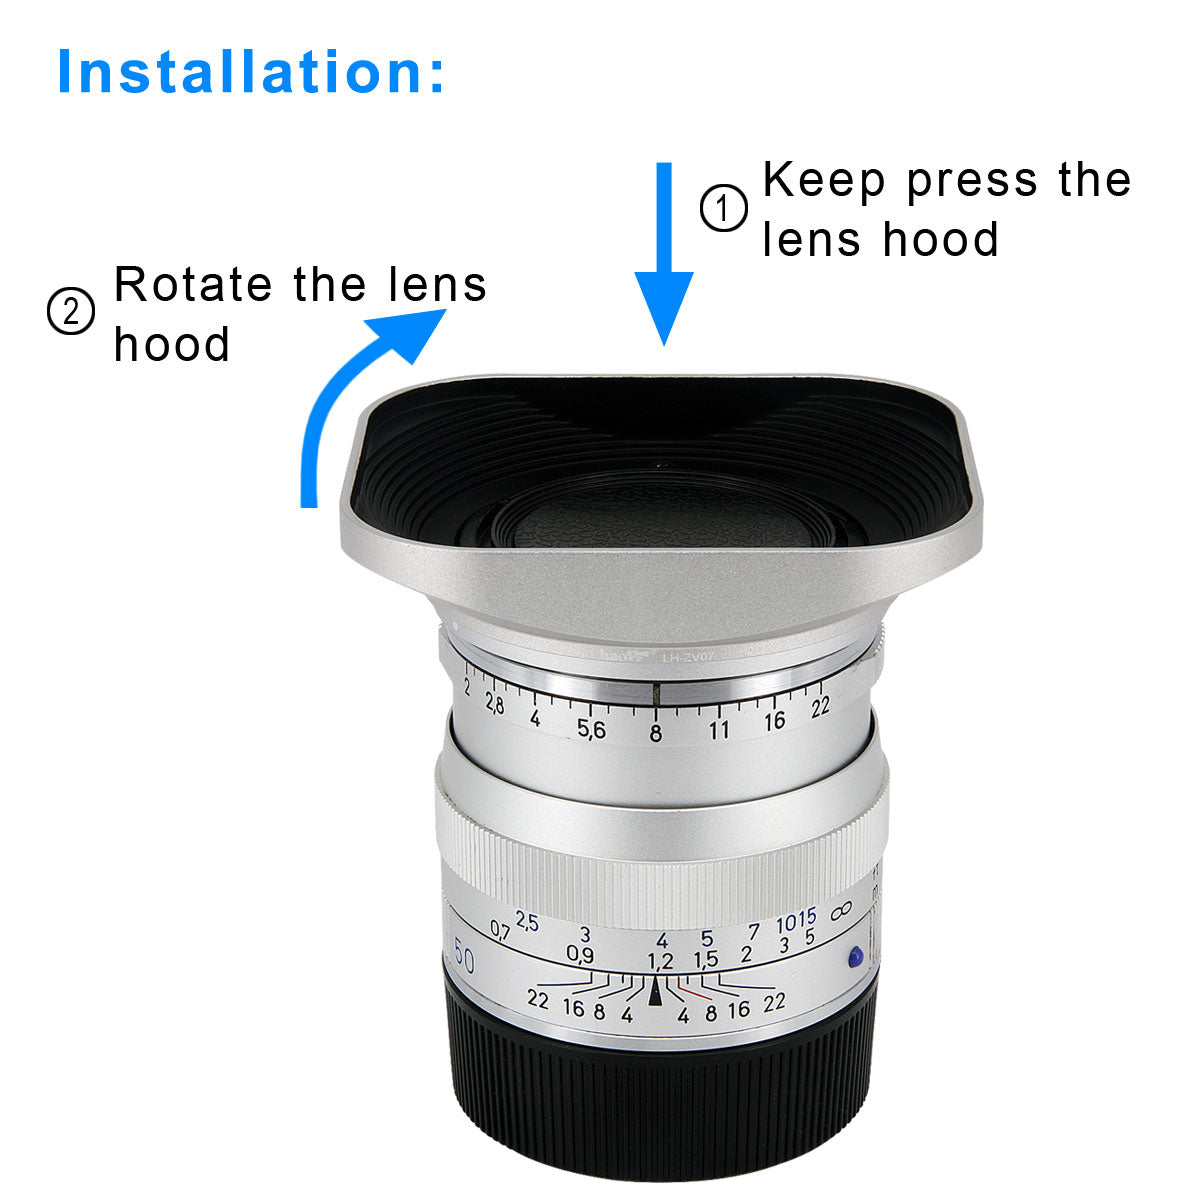 Haoge LH-ZV07 Square Metal Lens Hood for Carl Zeiss Biogon T* 2/35 35mm f2 ZM, C Biogon 2.8/35 35mm f2.8 ZM, Planar T 2/50 50mm f2 ZM; Voigtlander NOKTON CLASSIC 35mm f1.4 VM, 40mm f1.4 VM Lens silver